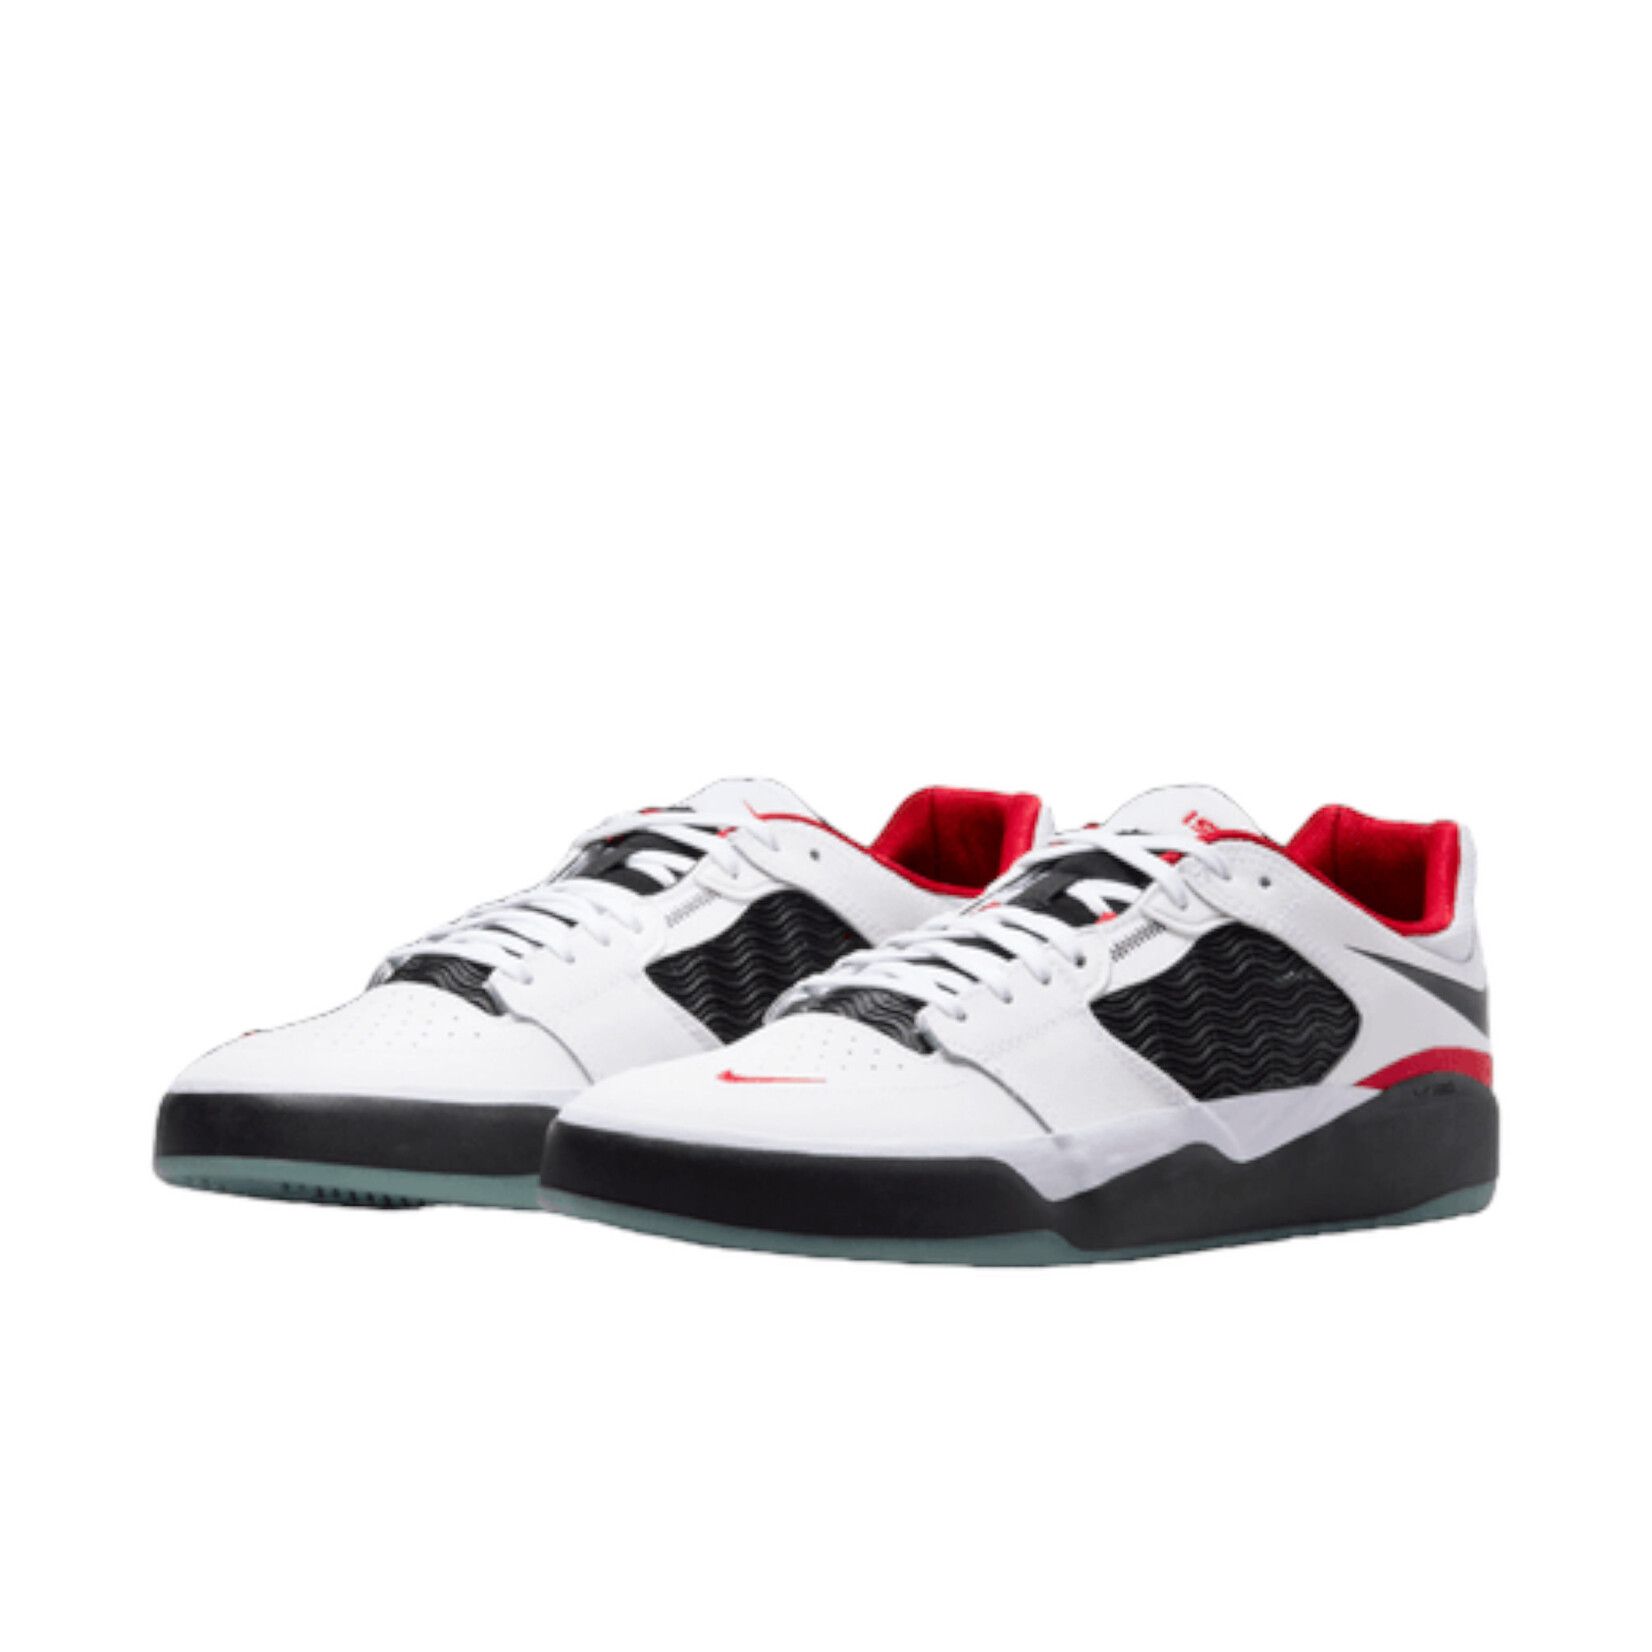 Nike SB Nike SB Ishod Wair Premium White/Black/University-Red